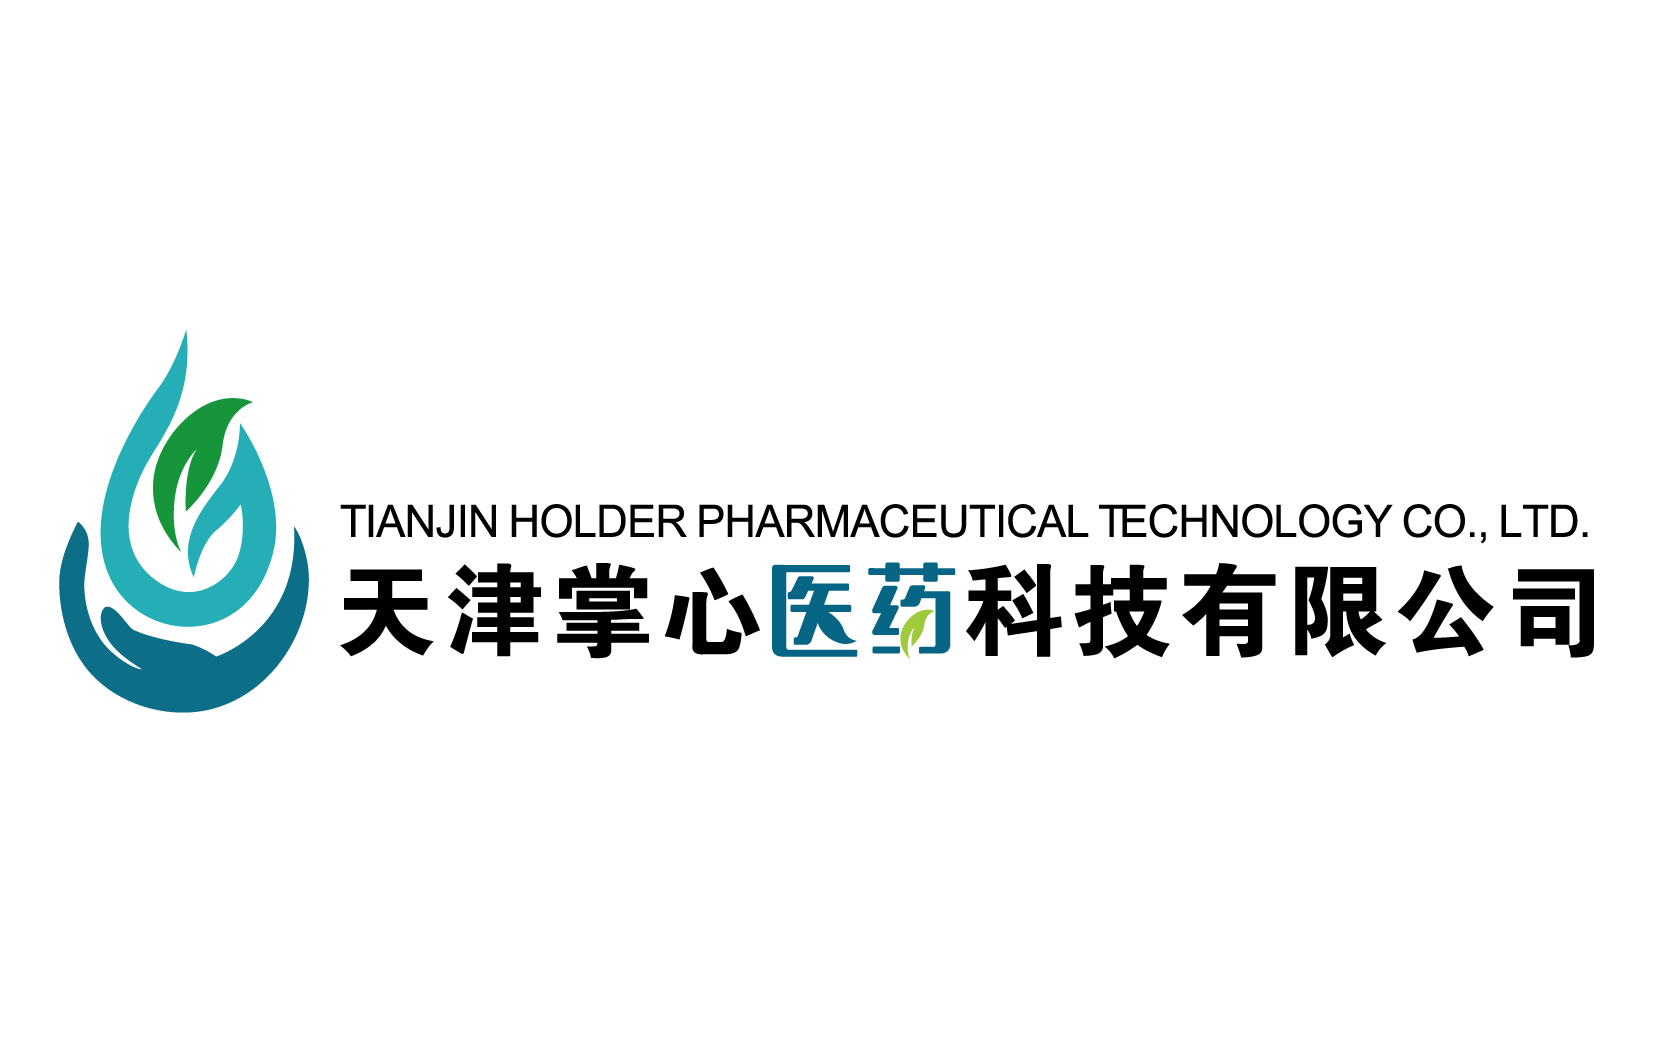 Tianjin Holder Pharmaceutical Technology